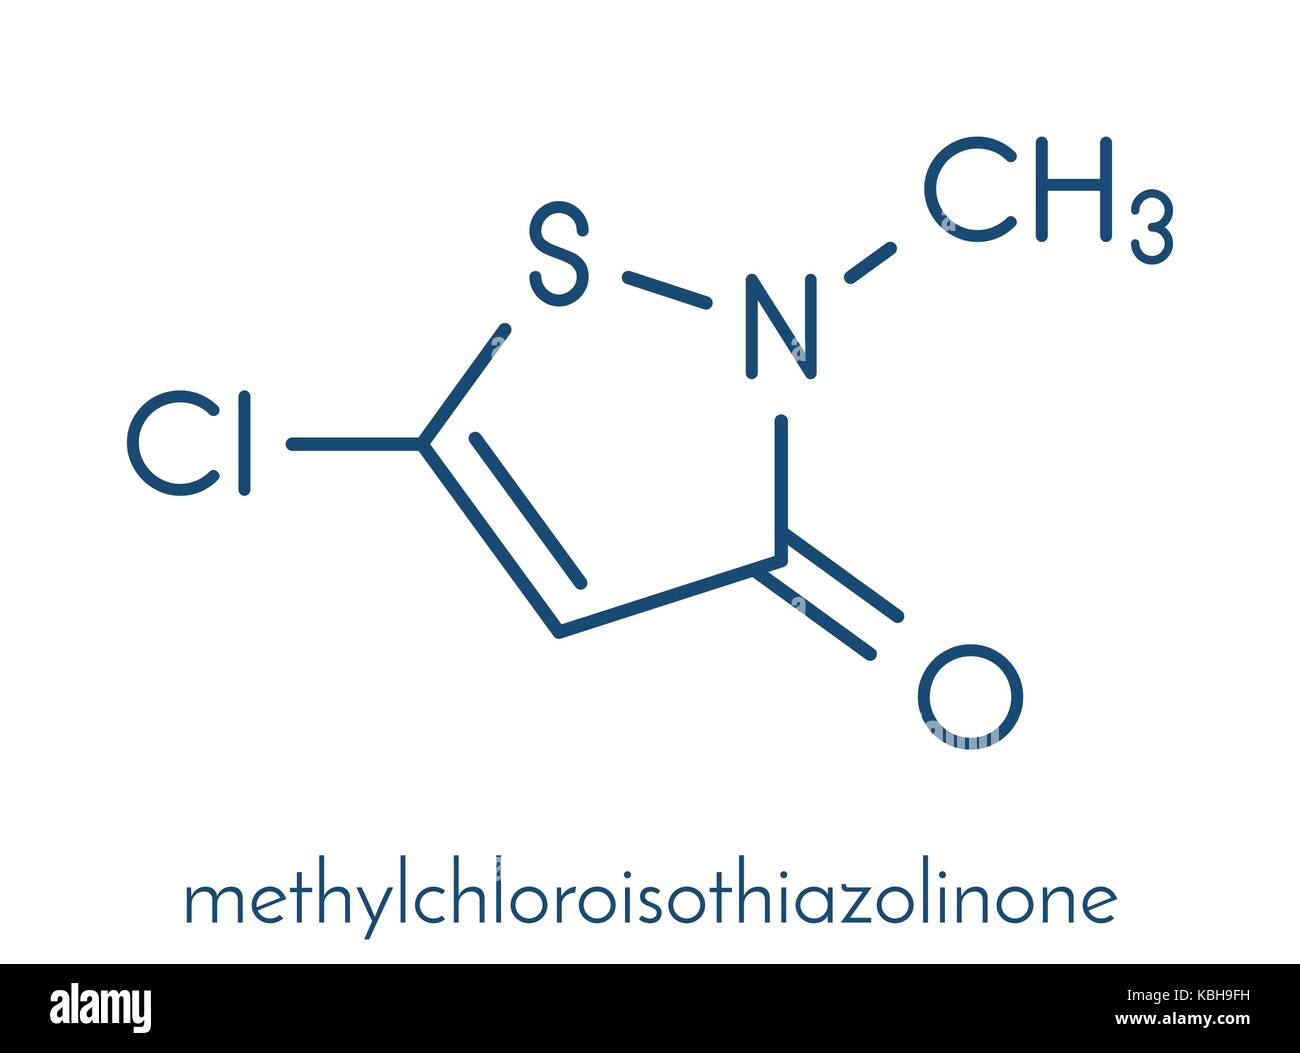 Konservierungsmittel methylchloroisothiazolinone Molekül, chemische Struktur. Oft in Wasser-basierte Produkte, z.b. Kosmetika verwendet. Skelettmuskulatur Formel. Stock Vektor